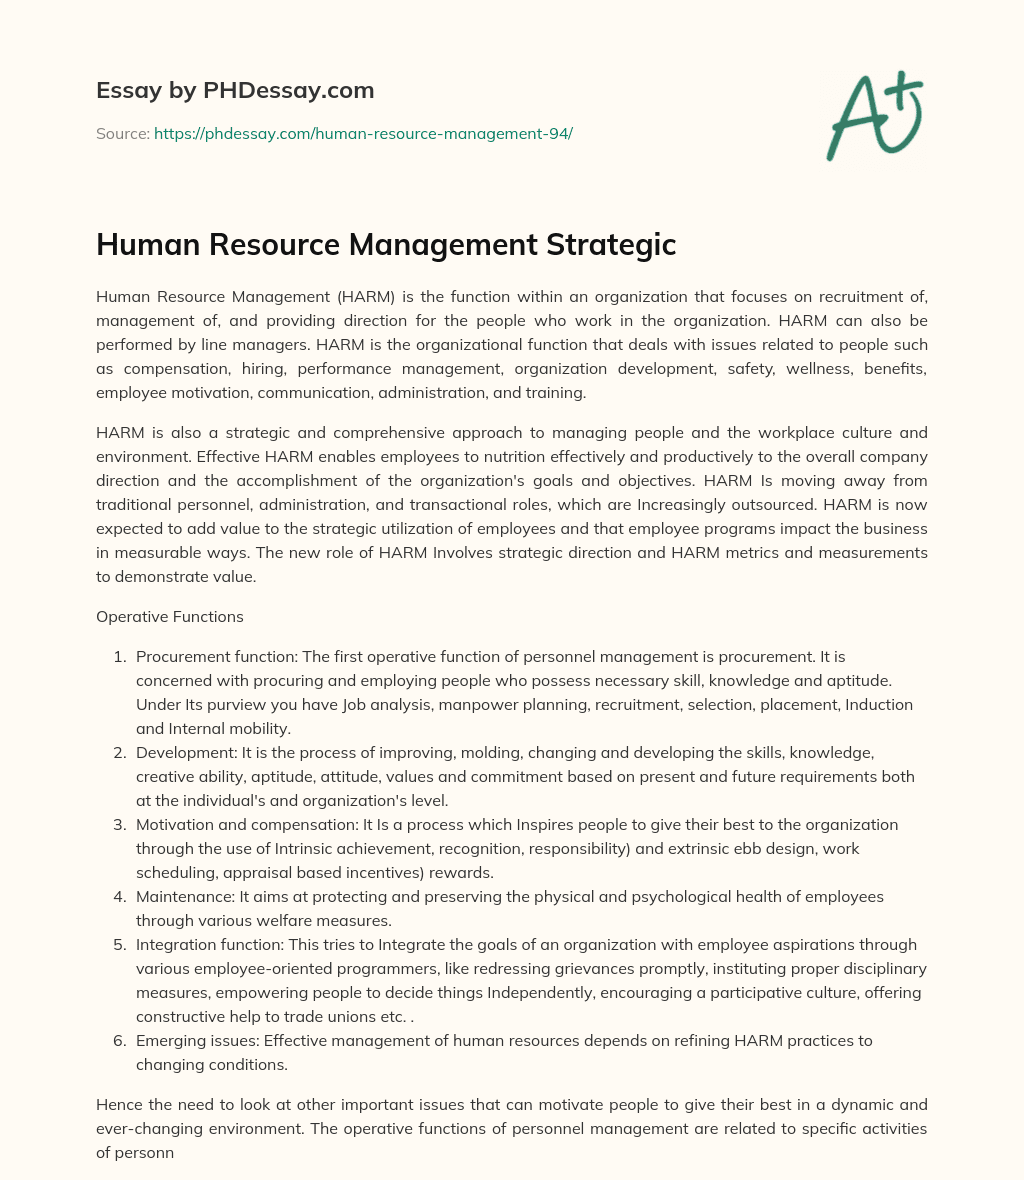 Human Resource Management Strategic essay